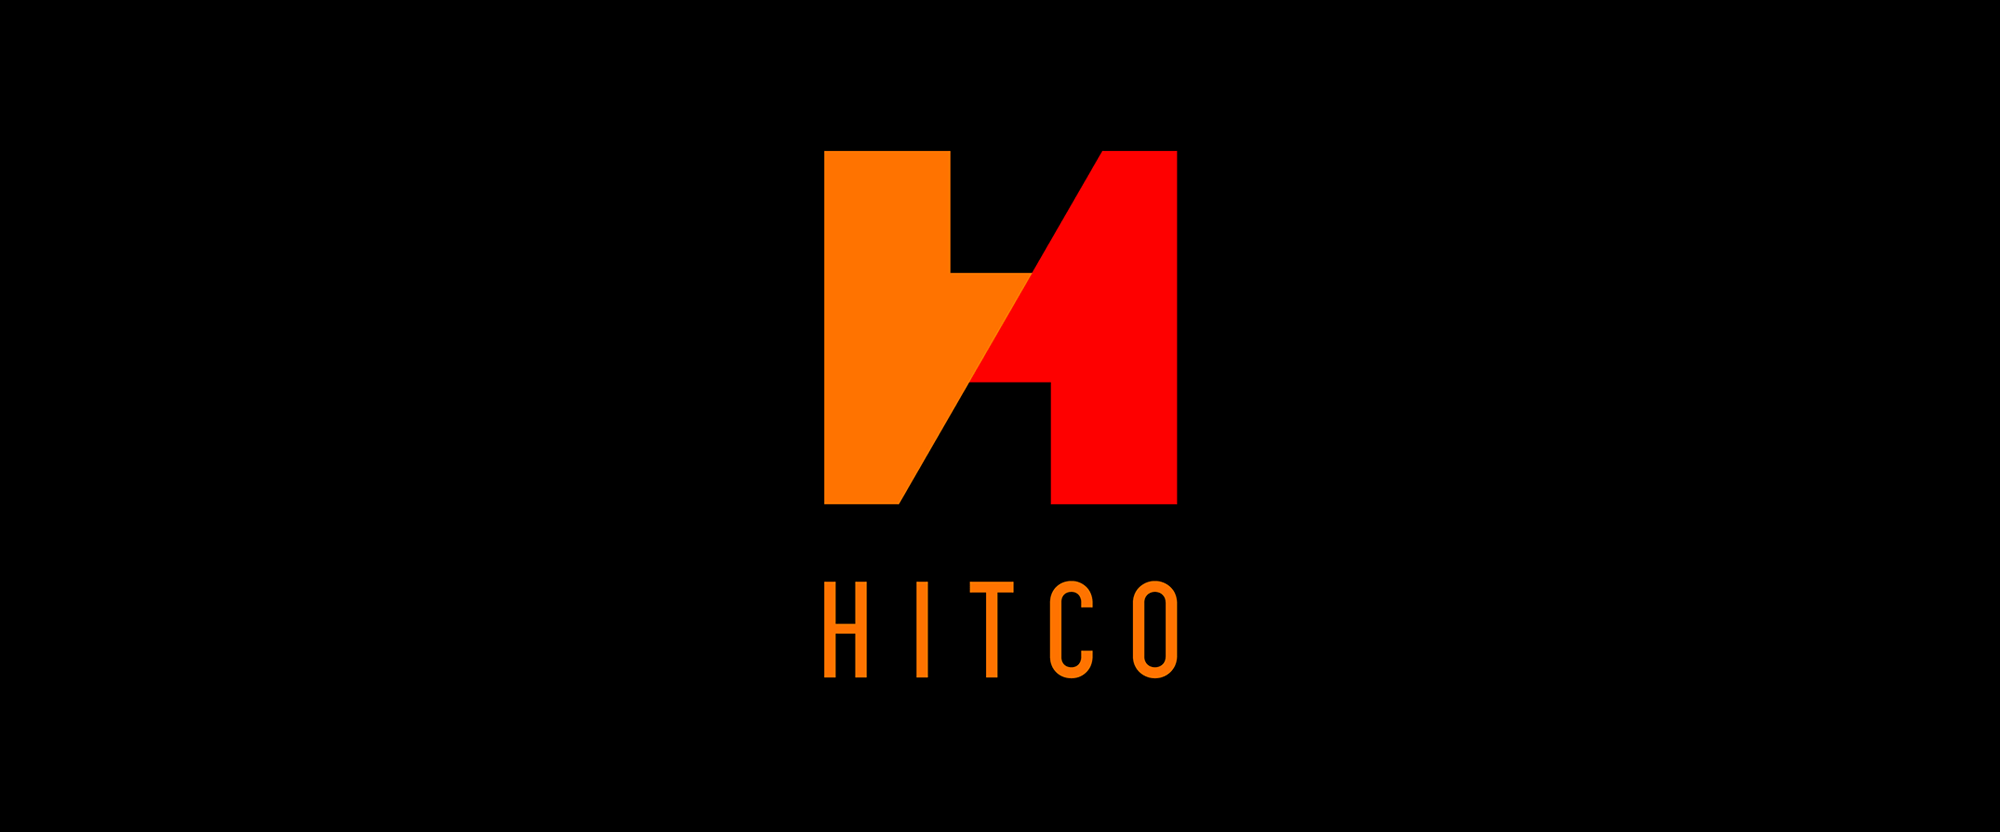 New Logo for Hitco Entertainment by Chermayeff & Geismar & Haviv